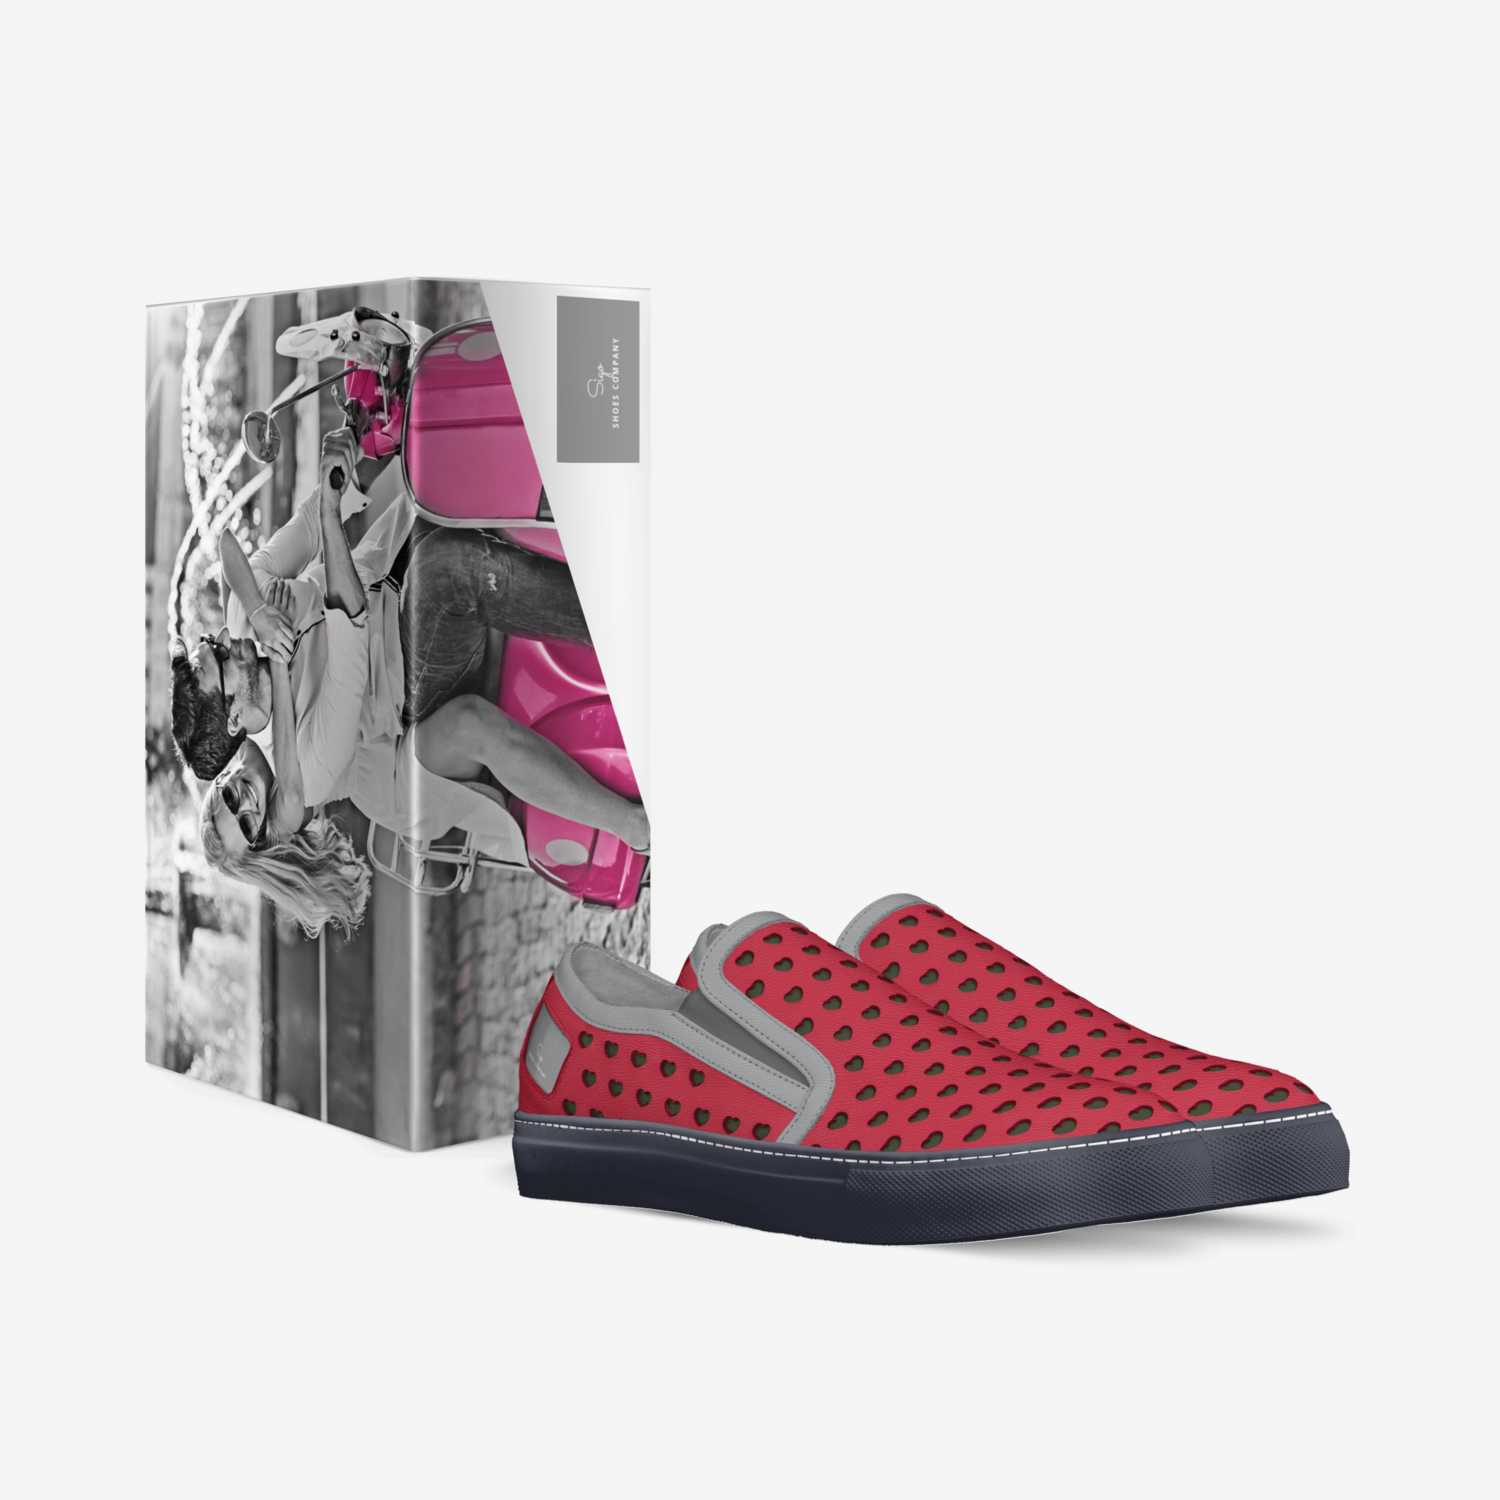 Sigo custom made in Italy shoes by Sarah Davenport | Box view